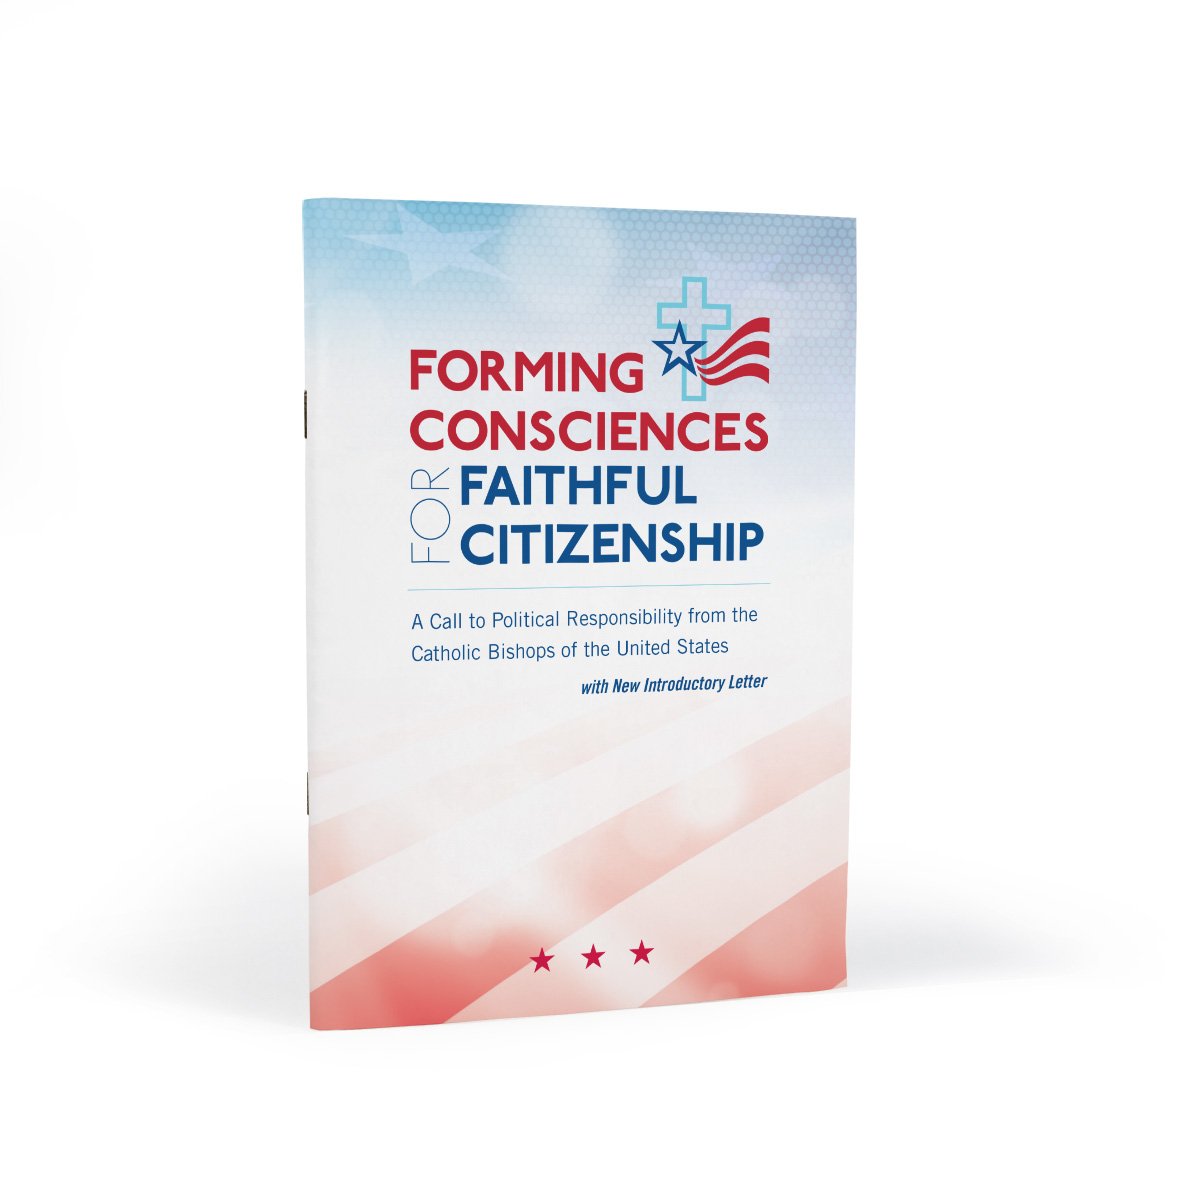 Forming Consciences for Faithful Citizenship